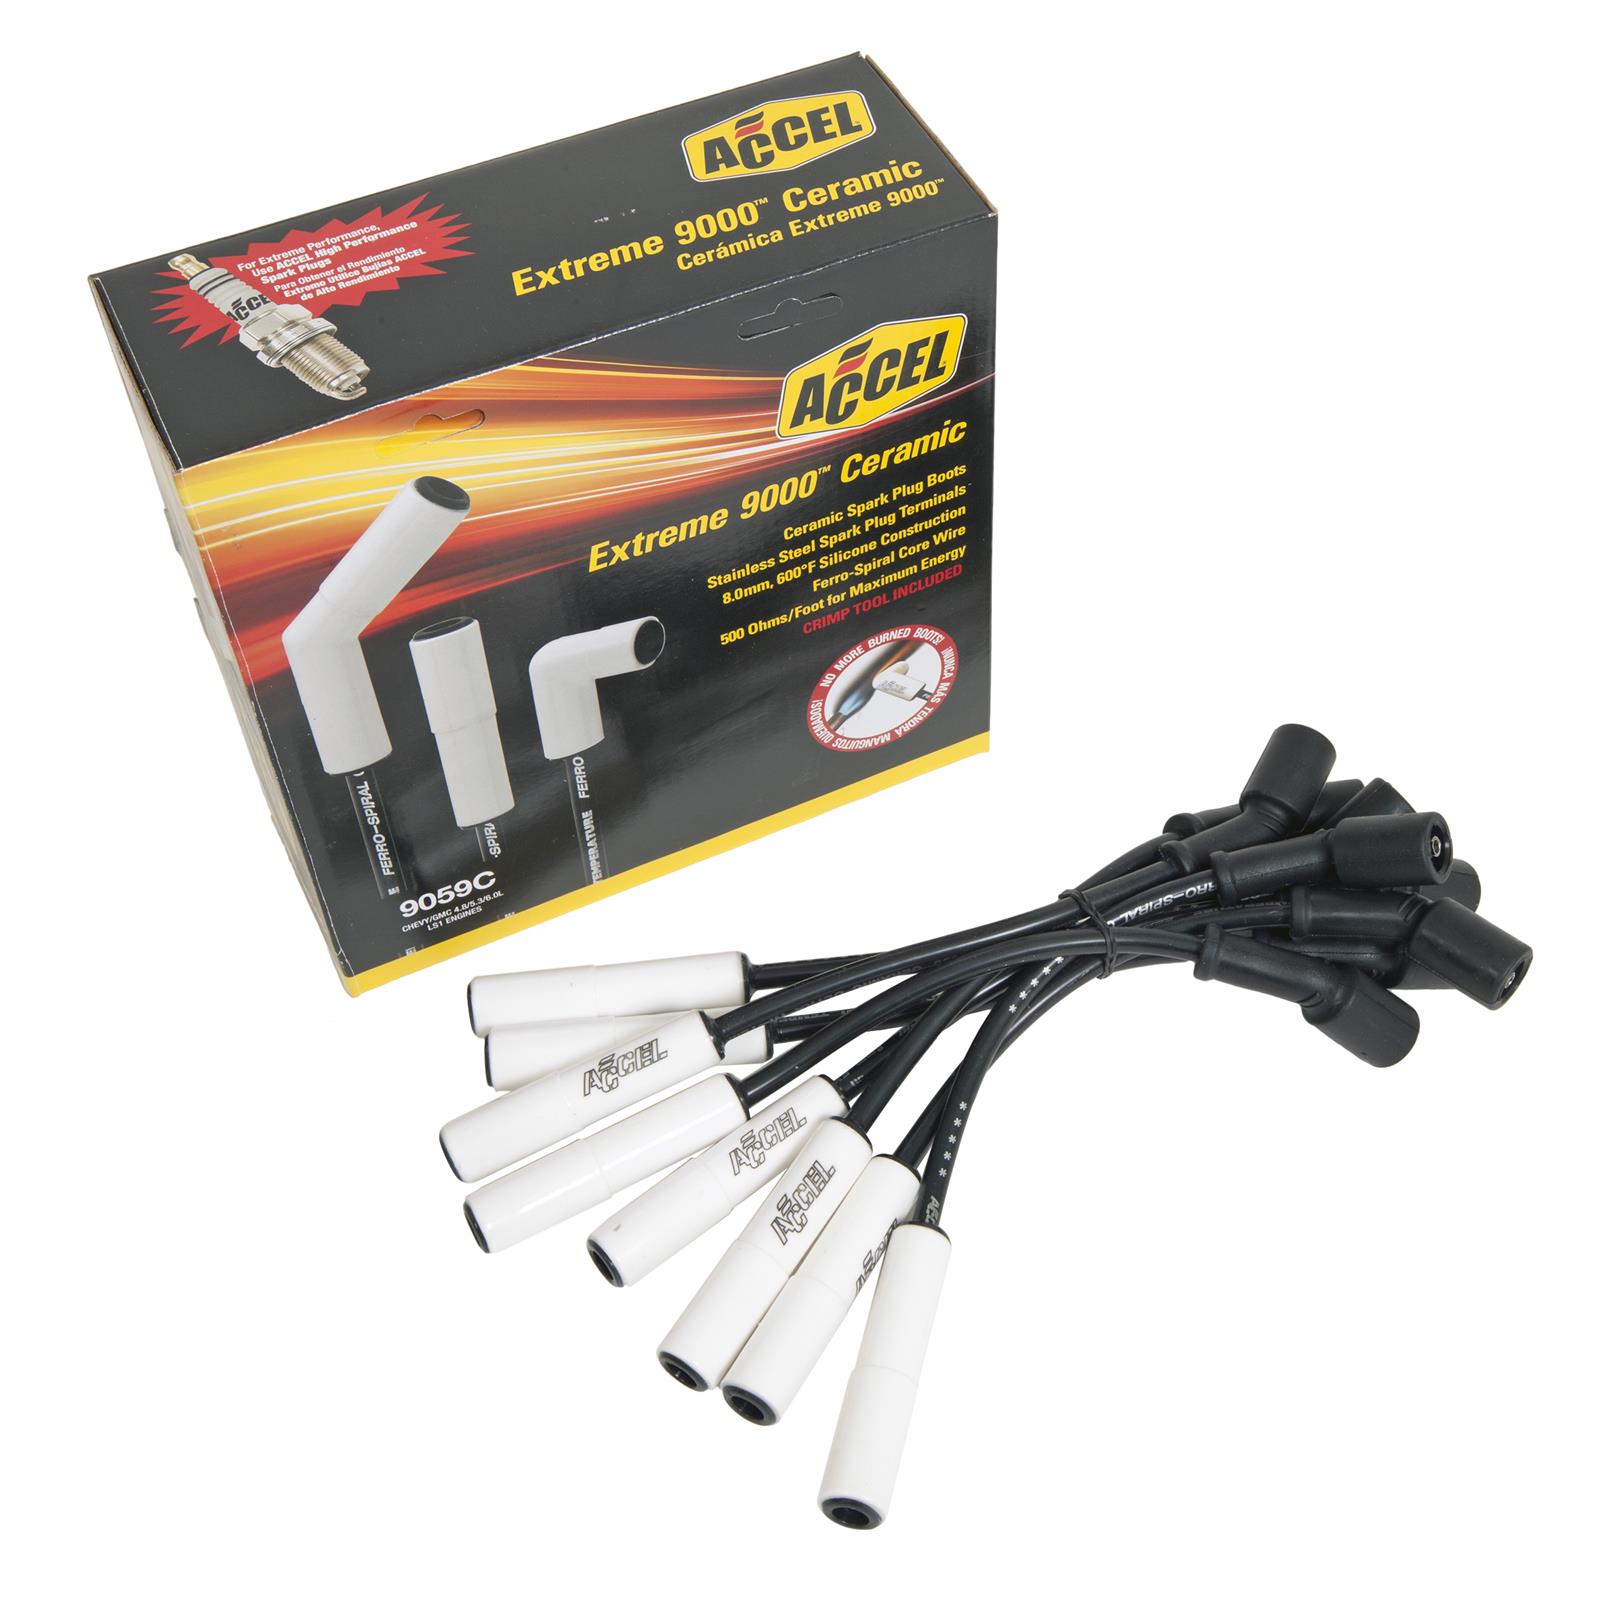  ACCEL 9018C Extreme 9000 Spark Plug Wire Set Ceramic Boot :  Automotive